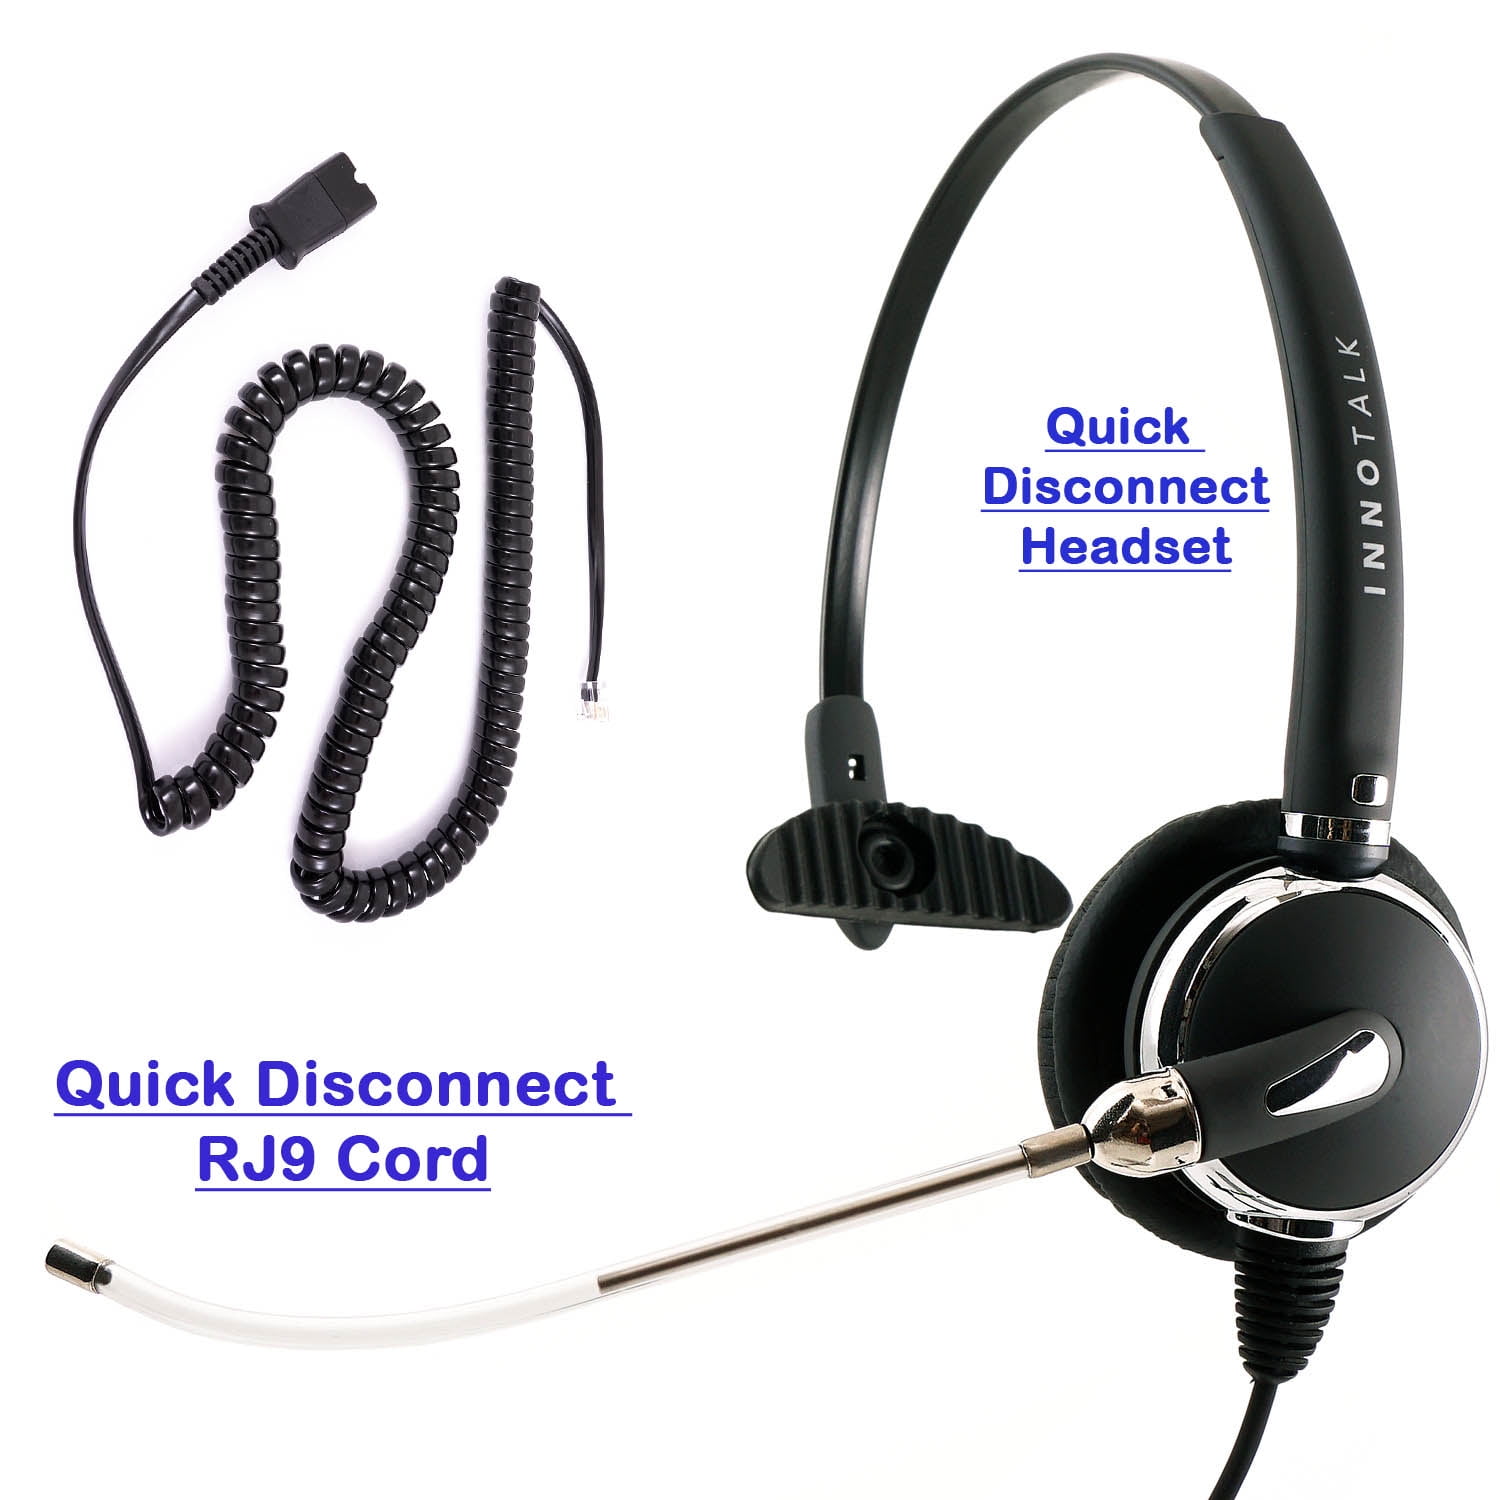 2.5mm Headset Noise Cancelling Mic Shock Protection Speaker Jabra Compatible QD 